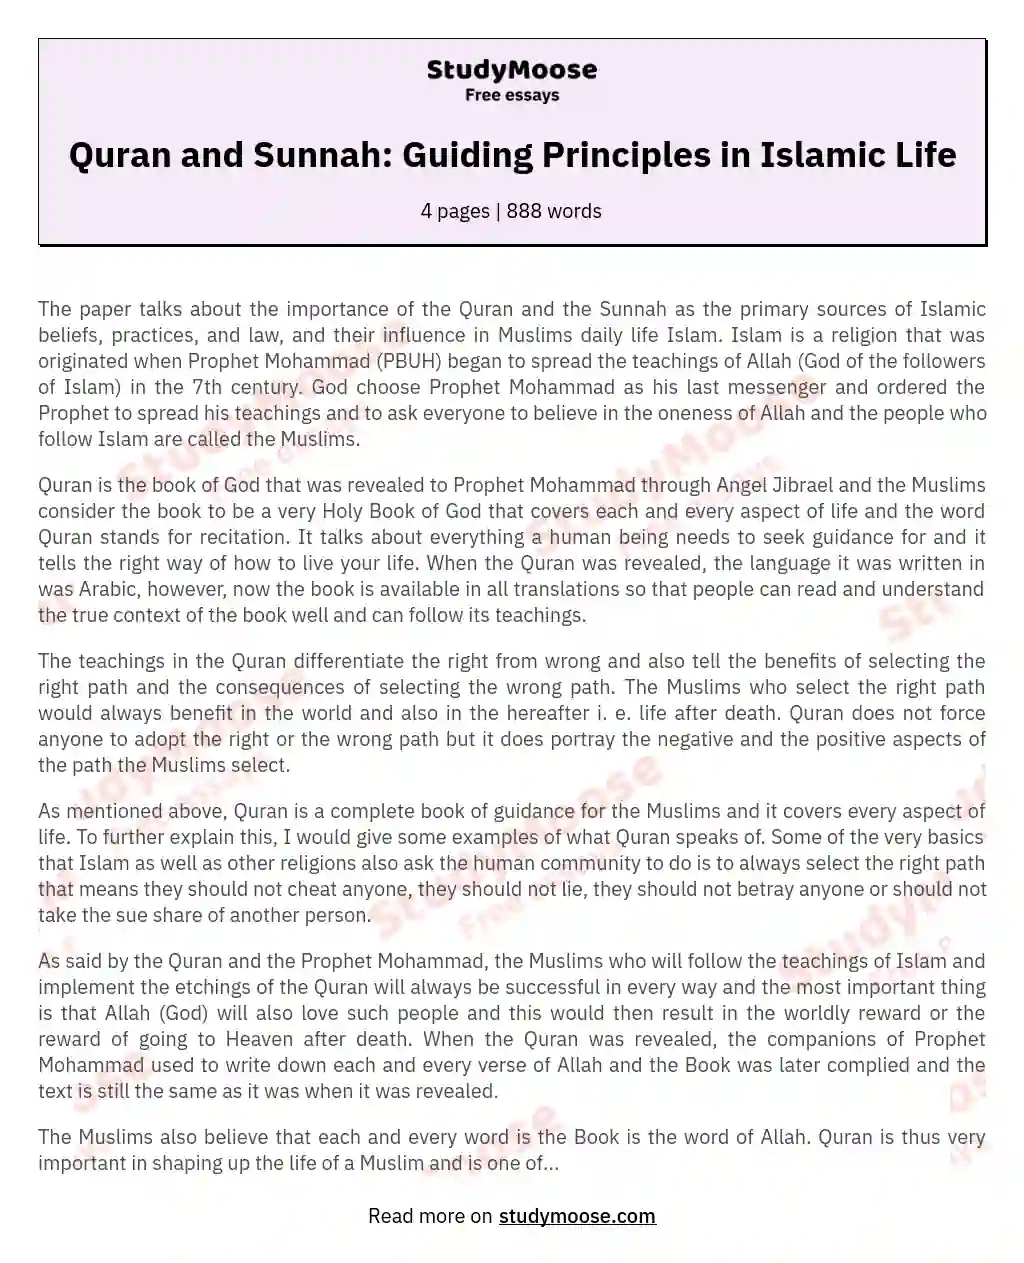 Quran and Sunnah: Guiding Principles in Islamic Life essay